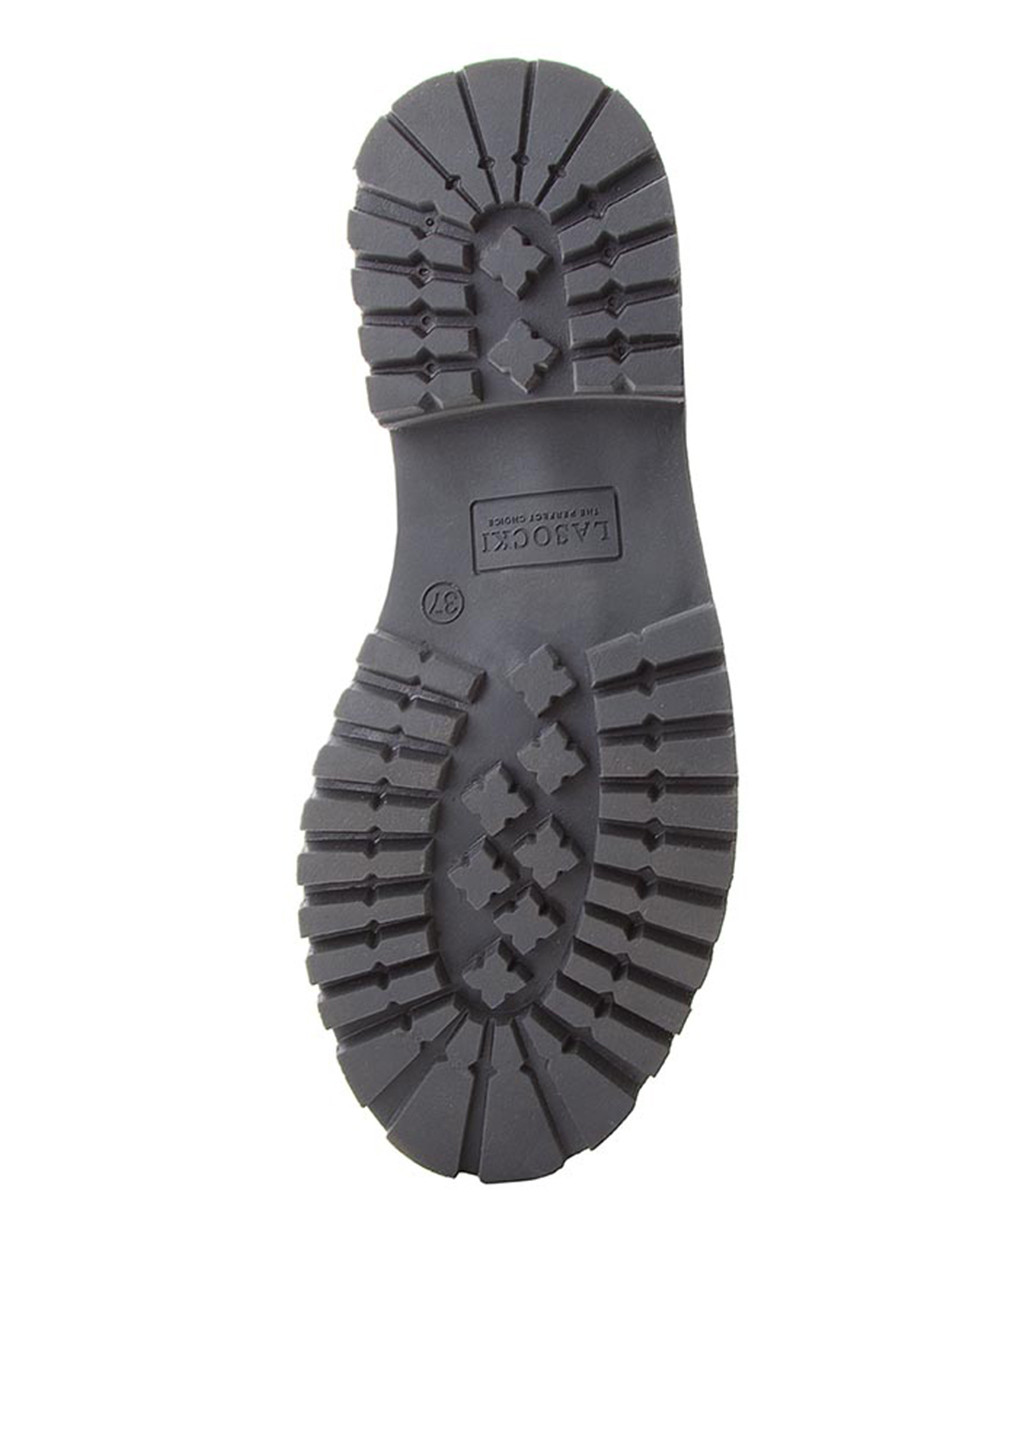 Зимние черевики wi20-aspen-02 тимберленды Lasocki с логотипом, с тиснением